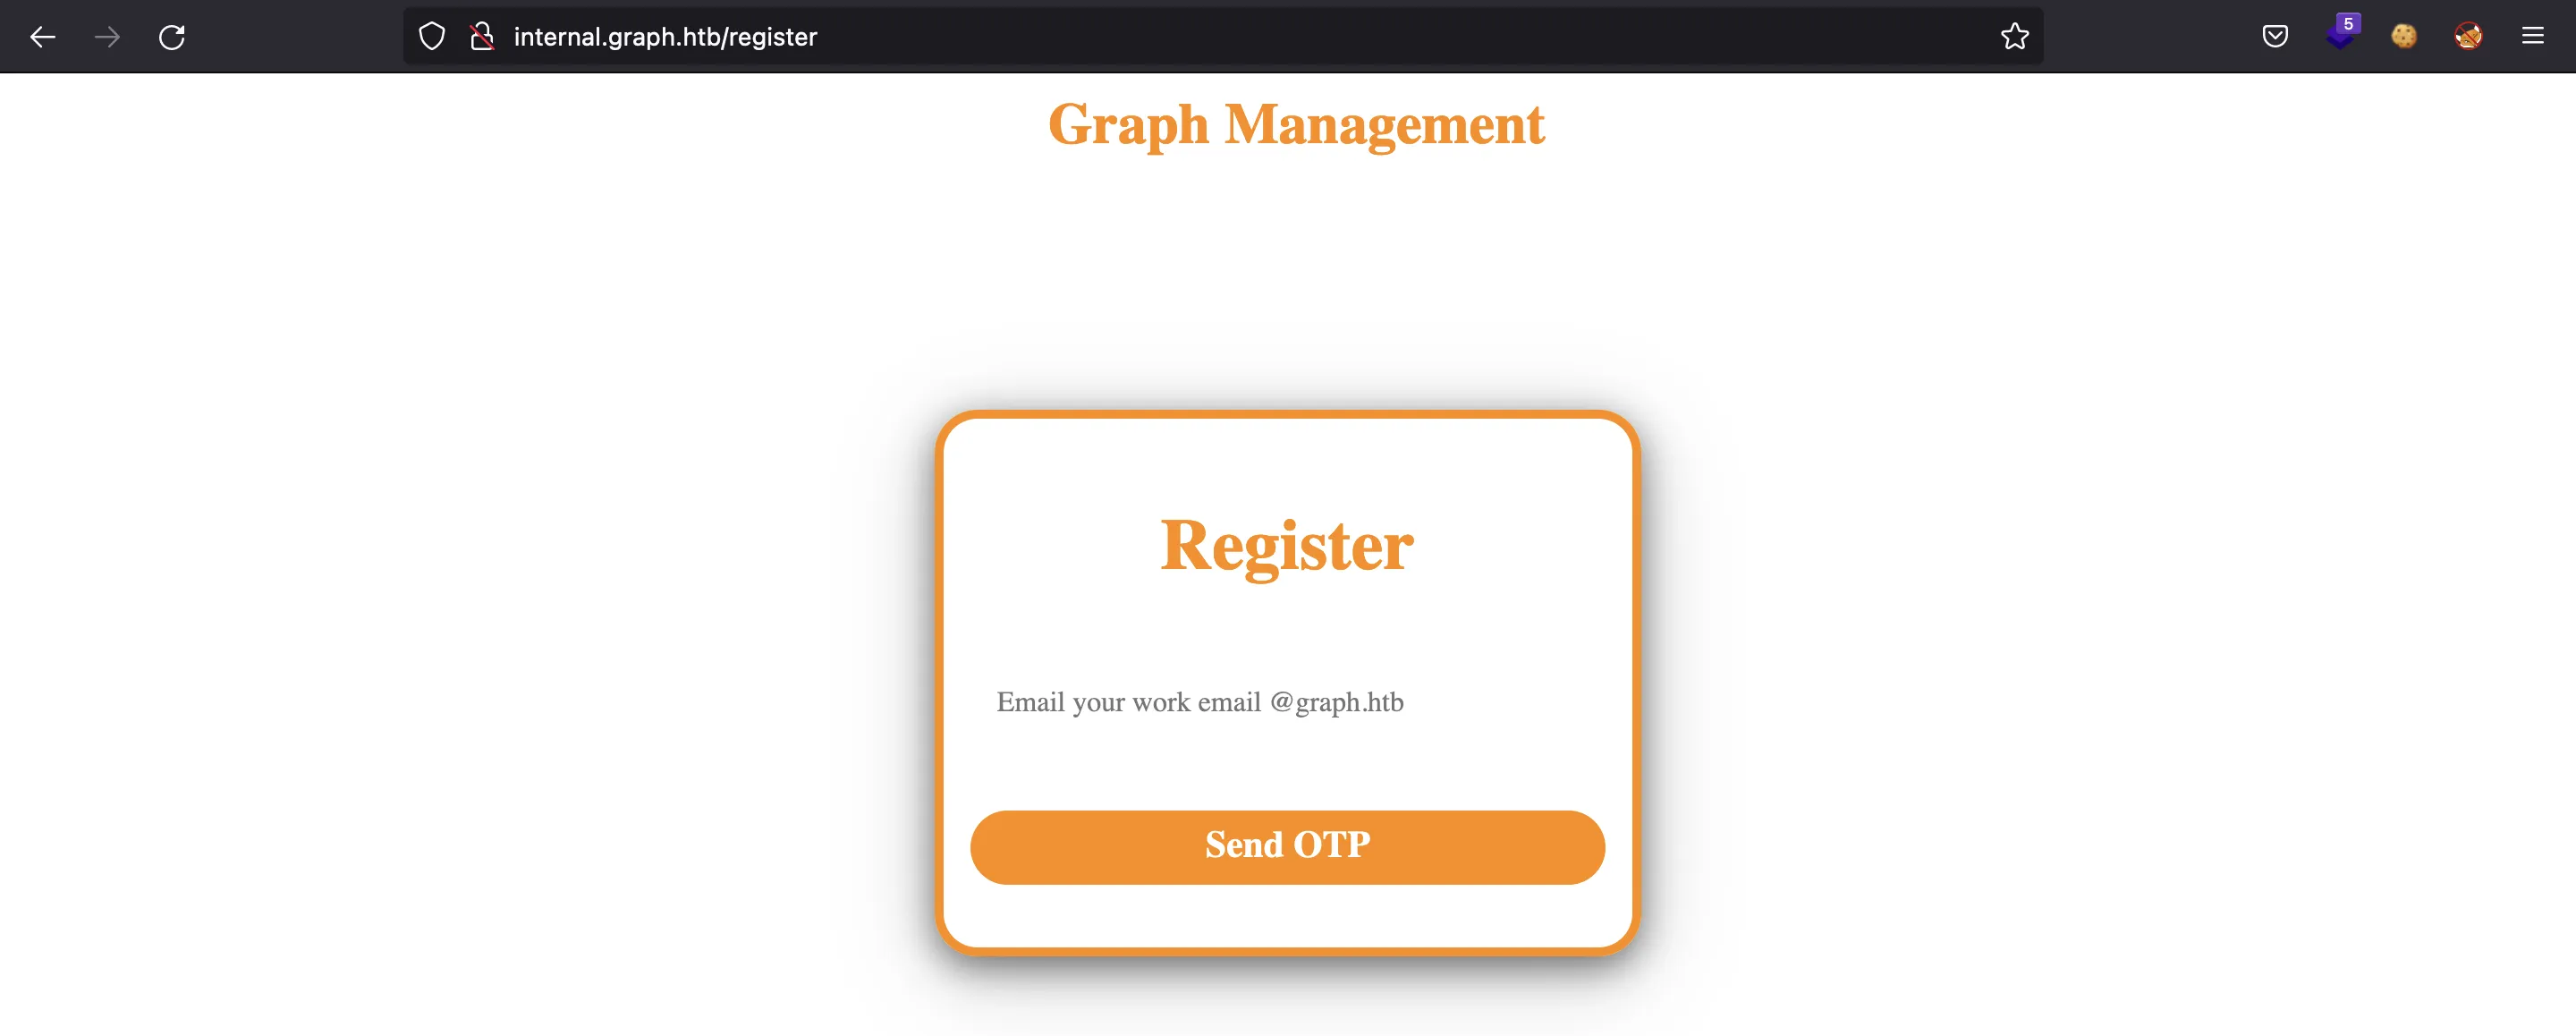 OverGraph internal register